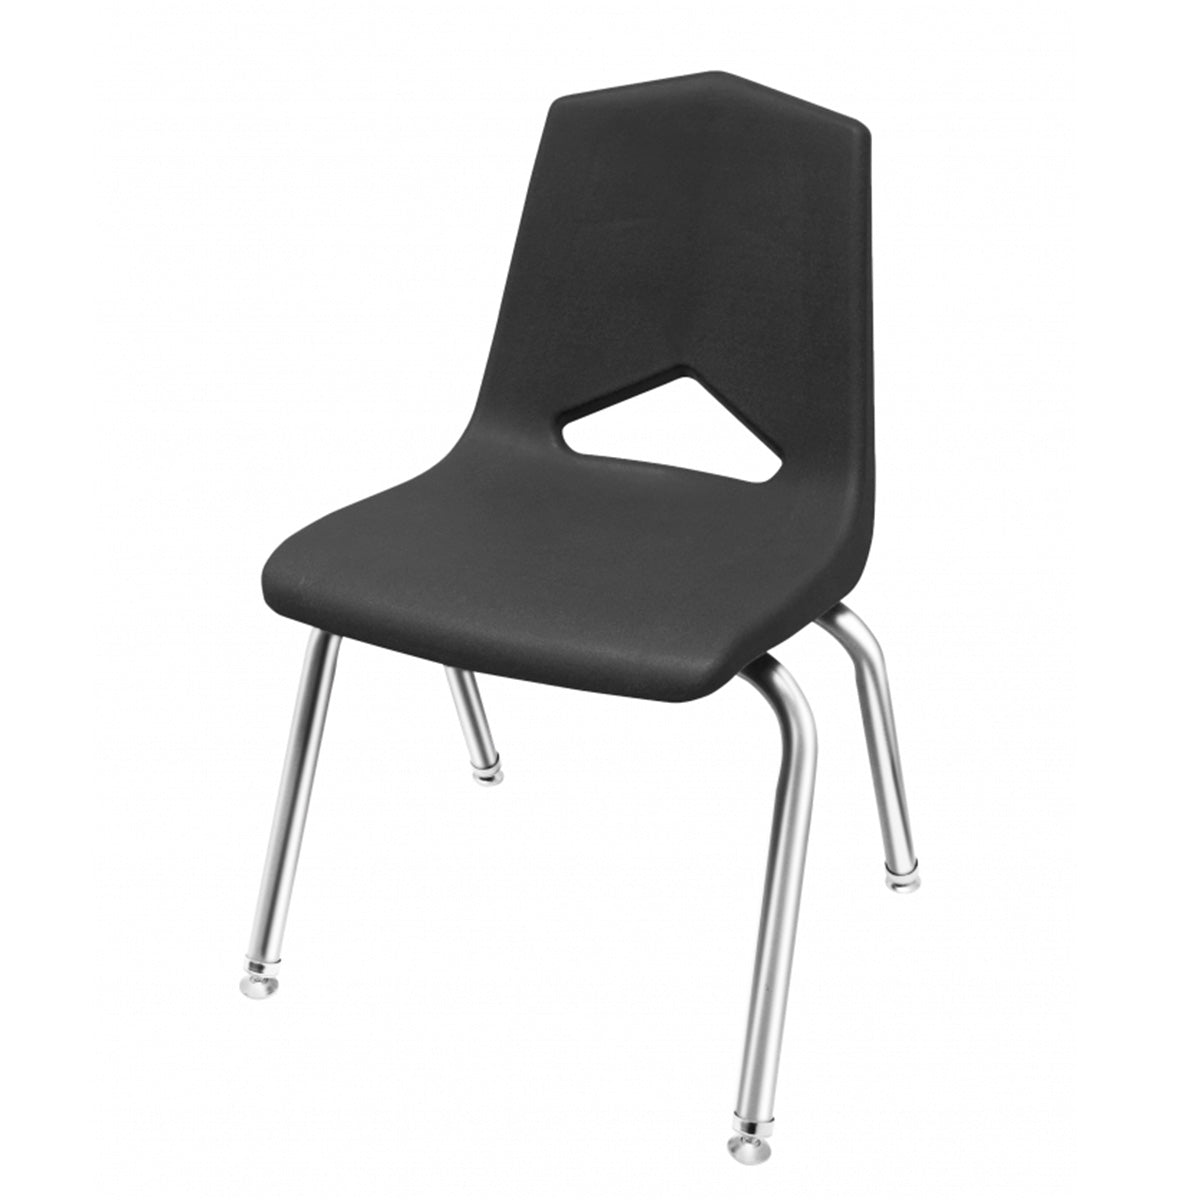 MG1101 Series School Chair - 18" Seat Height - Black Seat/Chrome Frame